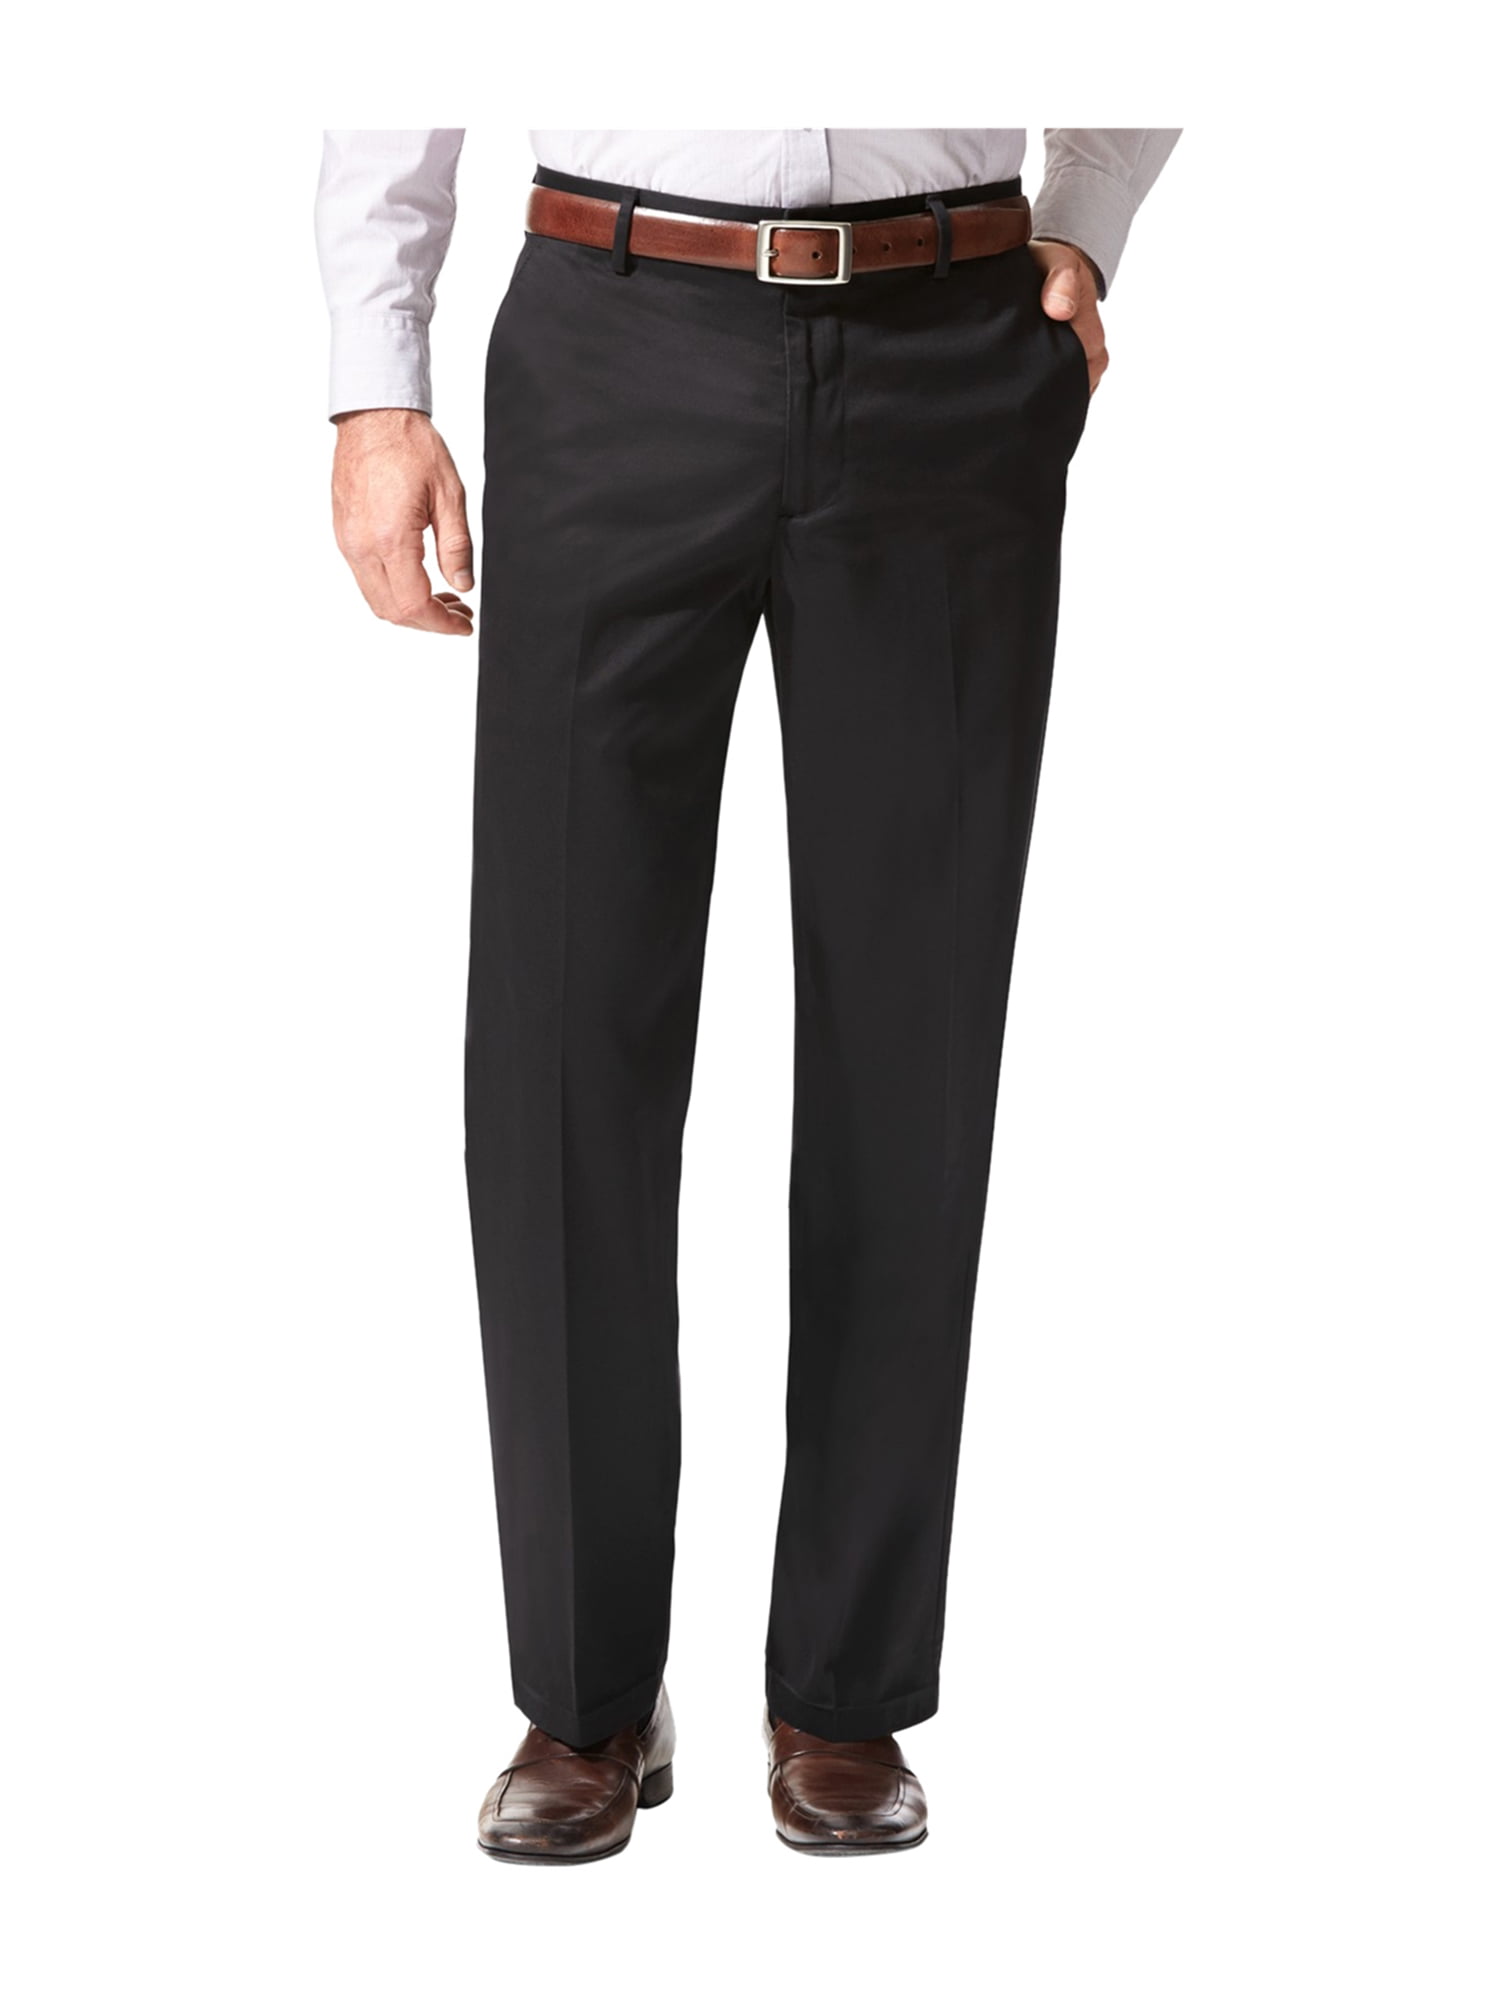 Dockers Mens Classic Fit Casual Trouser Pants black 32x29 | Walmart Canada